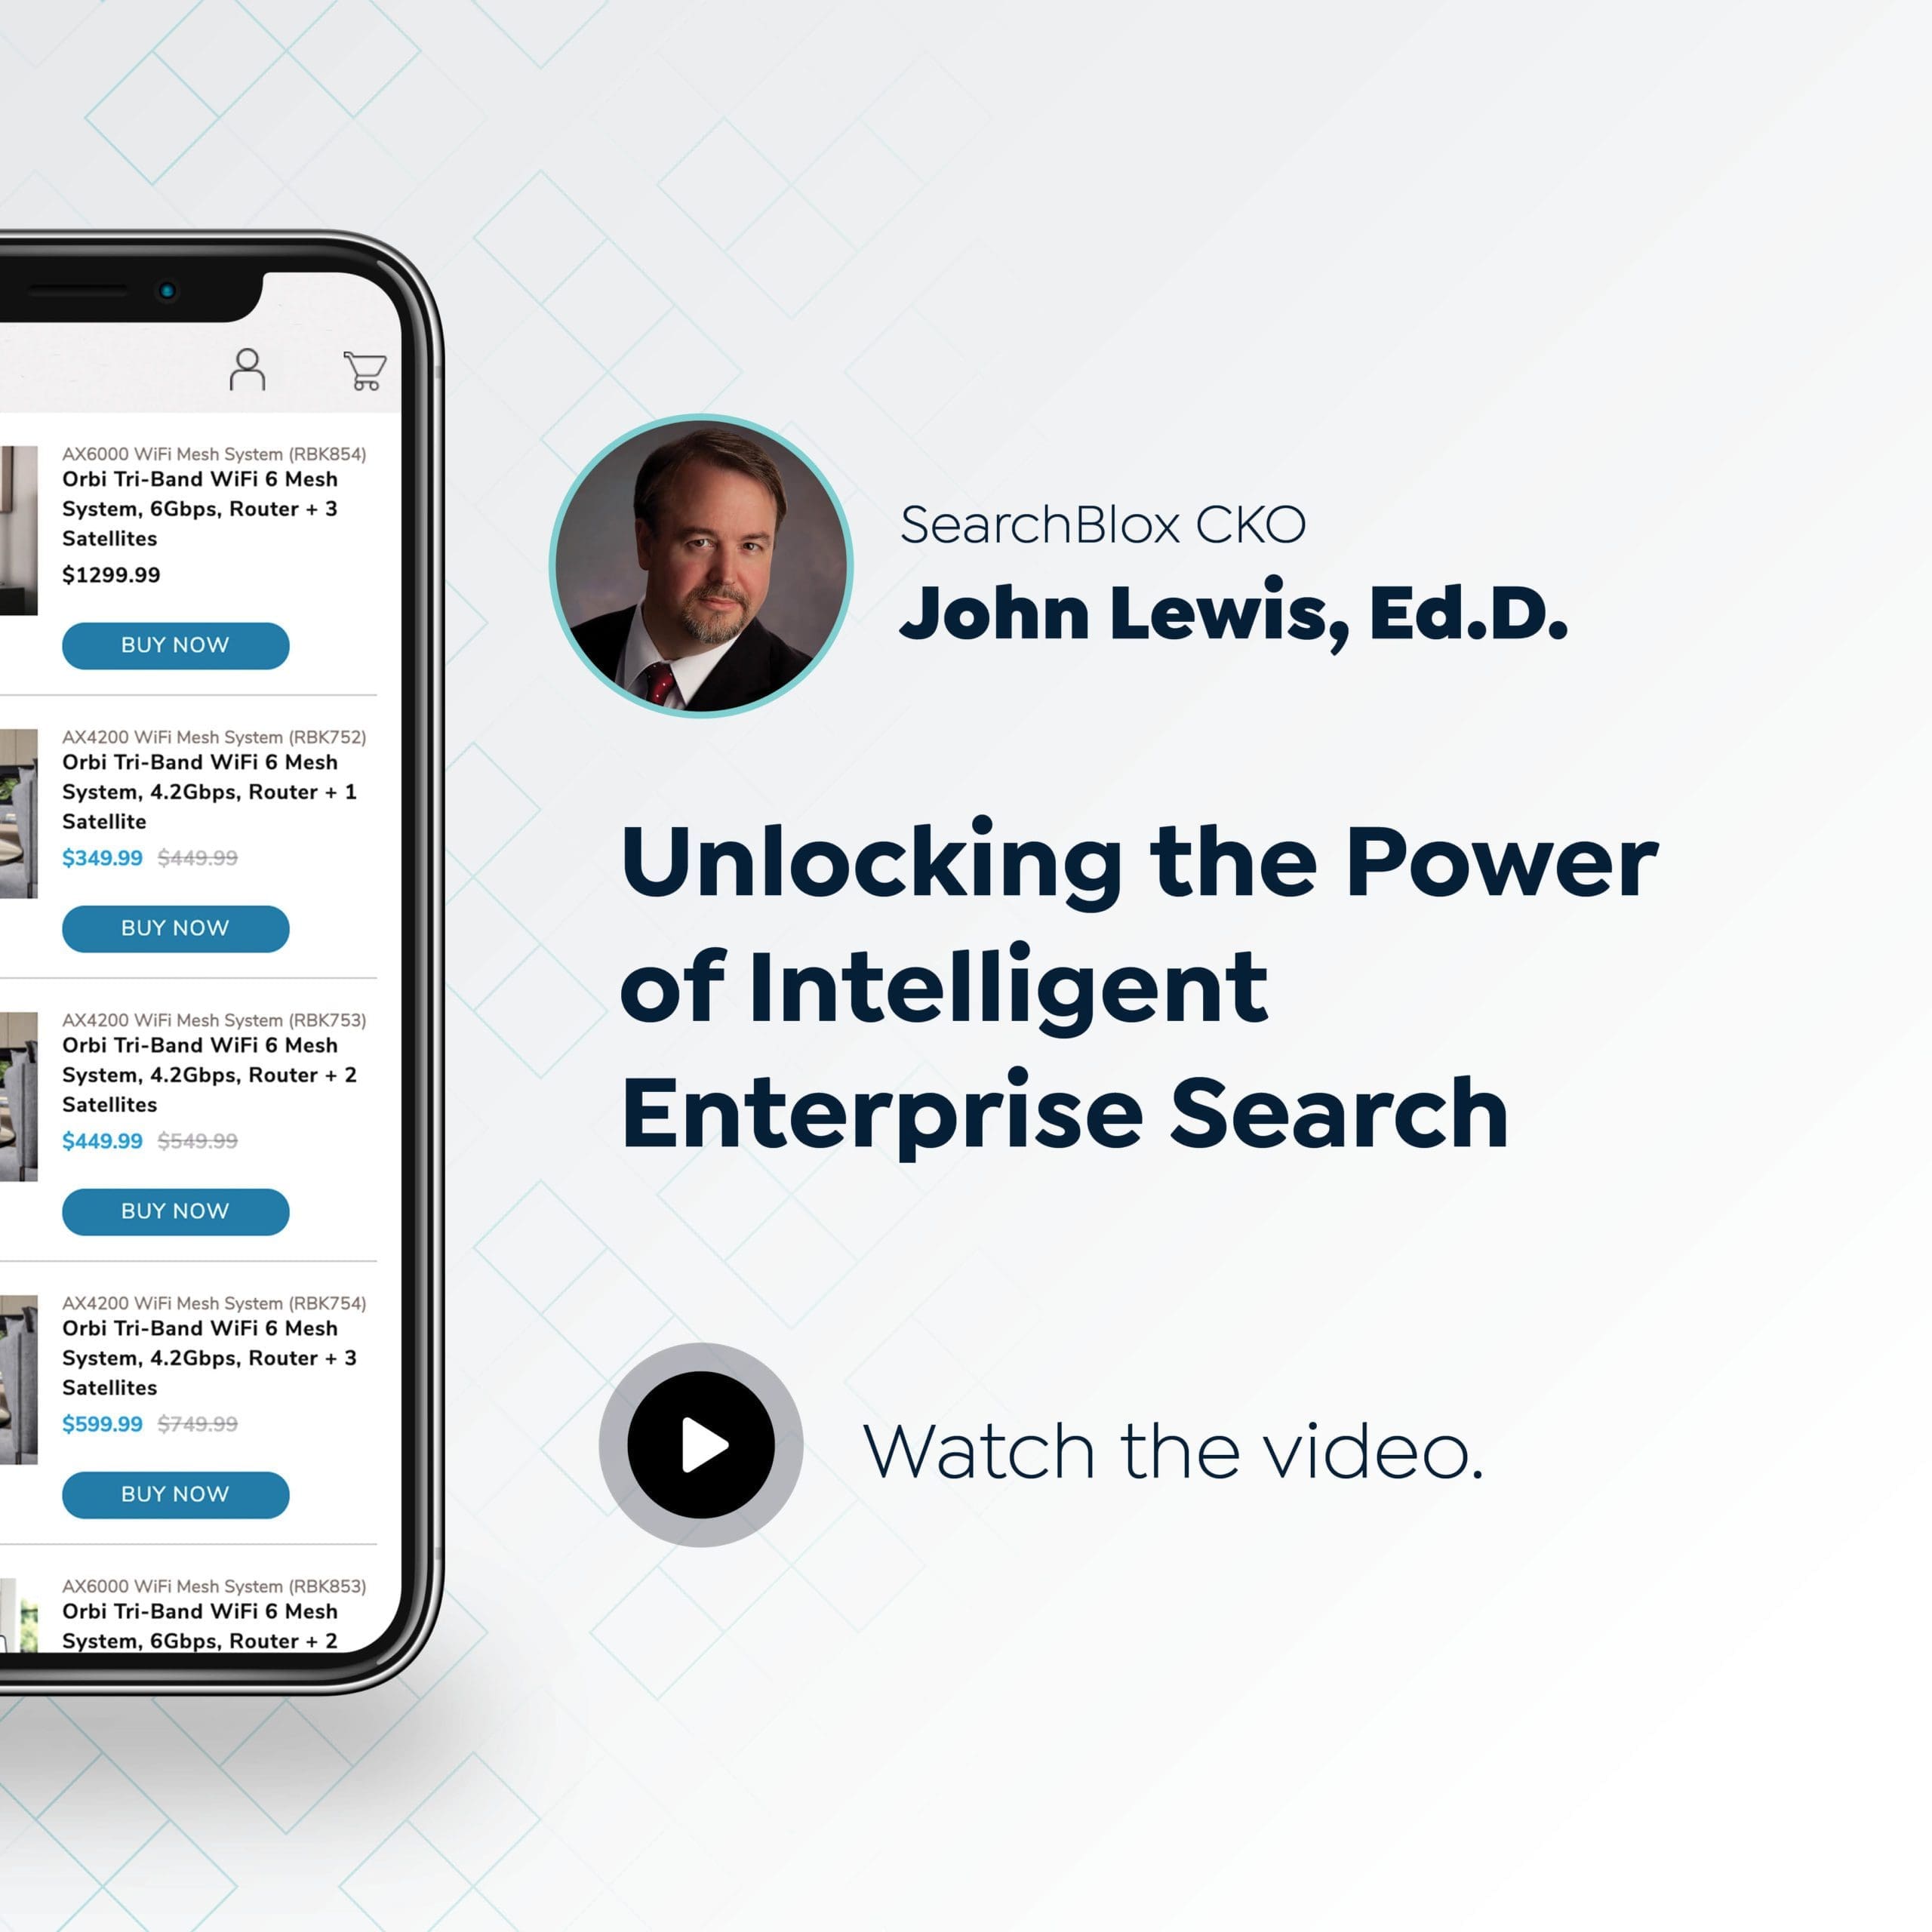 Unlocking the Power of Intelligent Enterprise Search Video